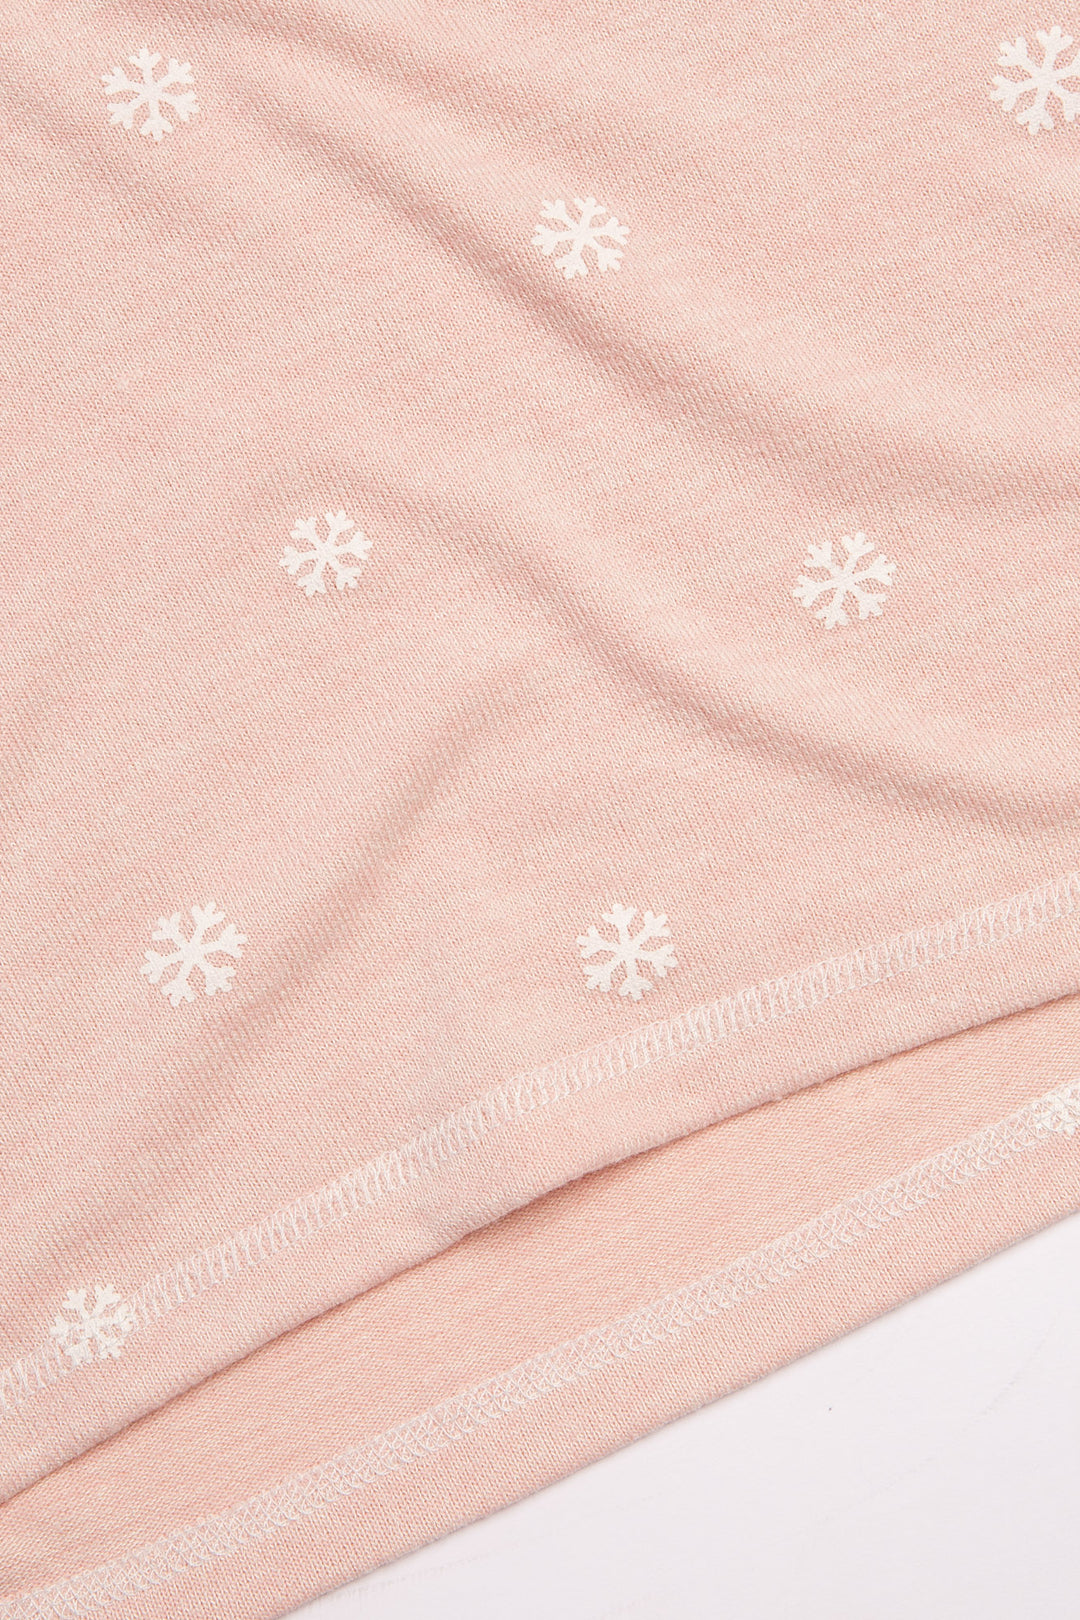 Pink pajama set in matching gift bag. Snowflake print top & pj pant w/ribbon tie, in Repreve soft knit. (7200024330340)